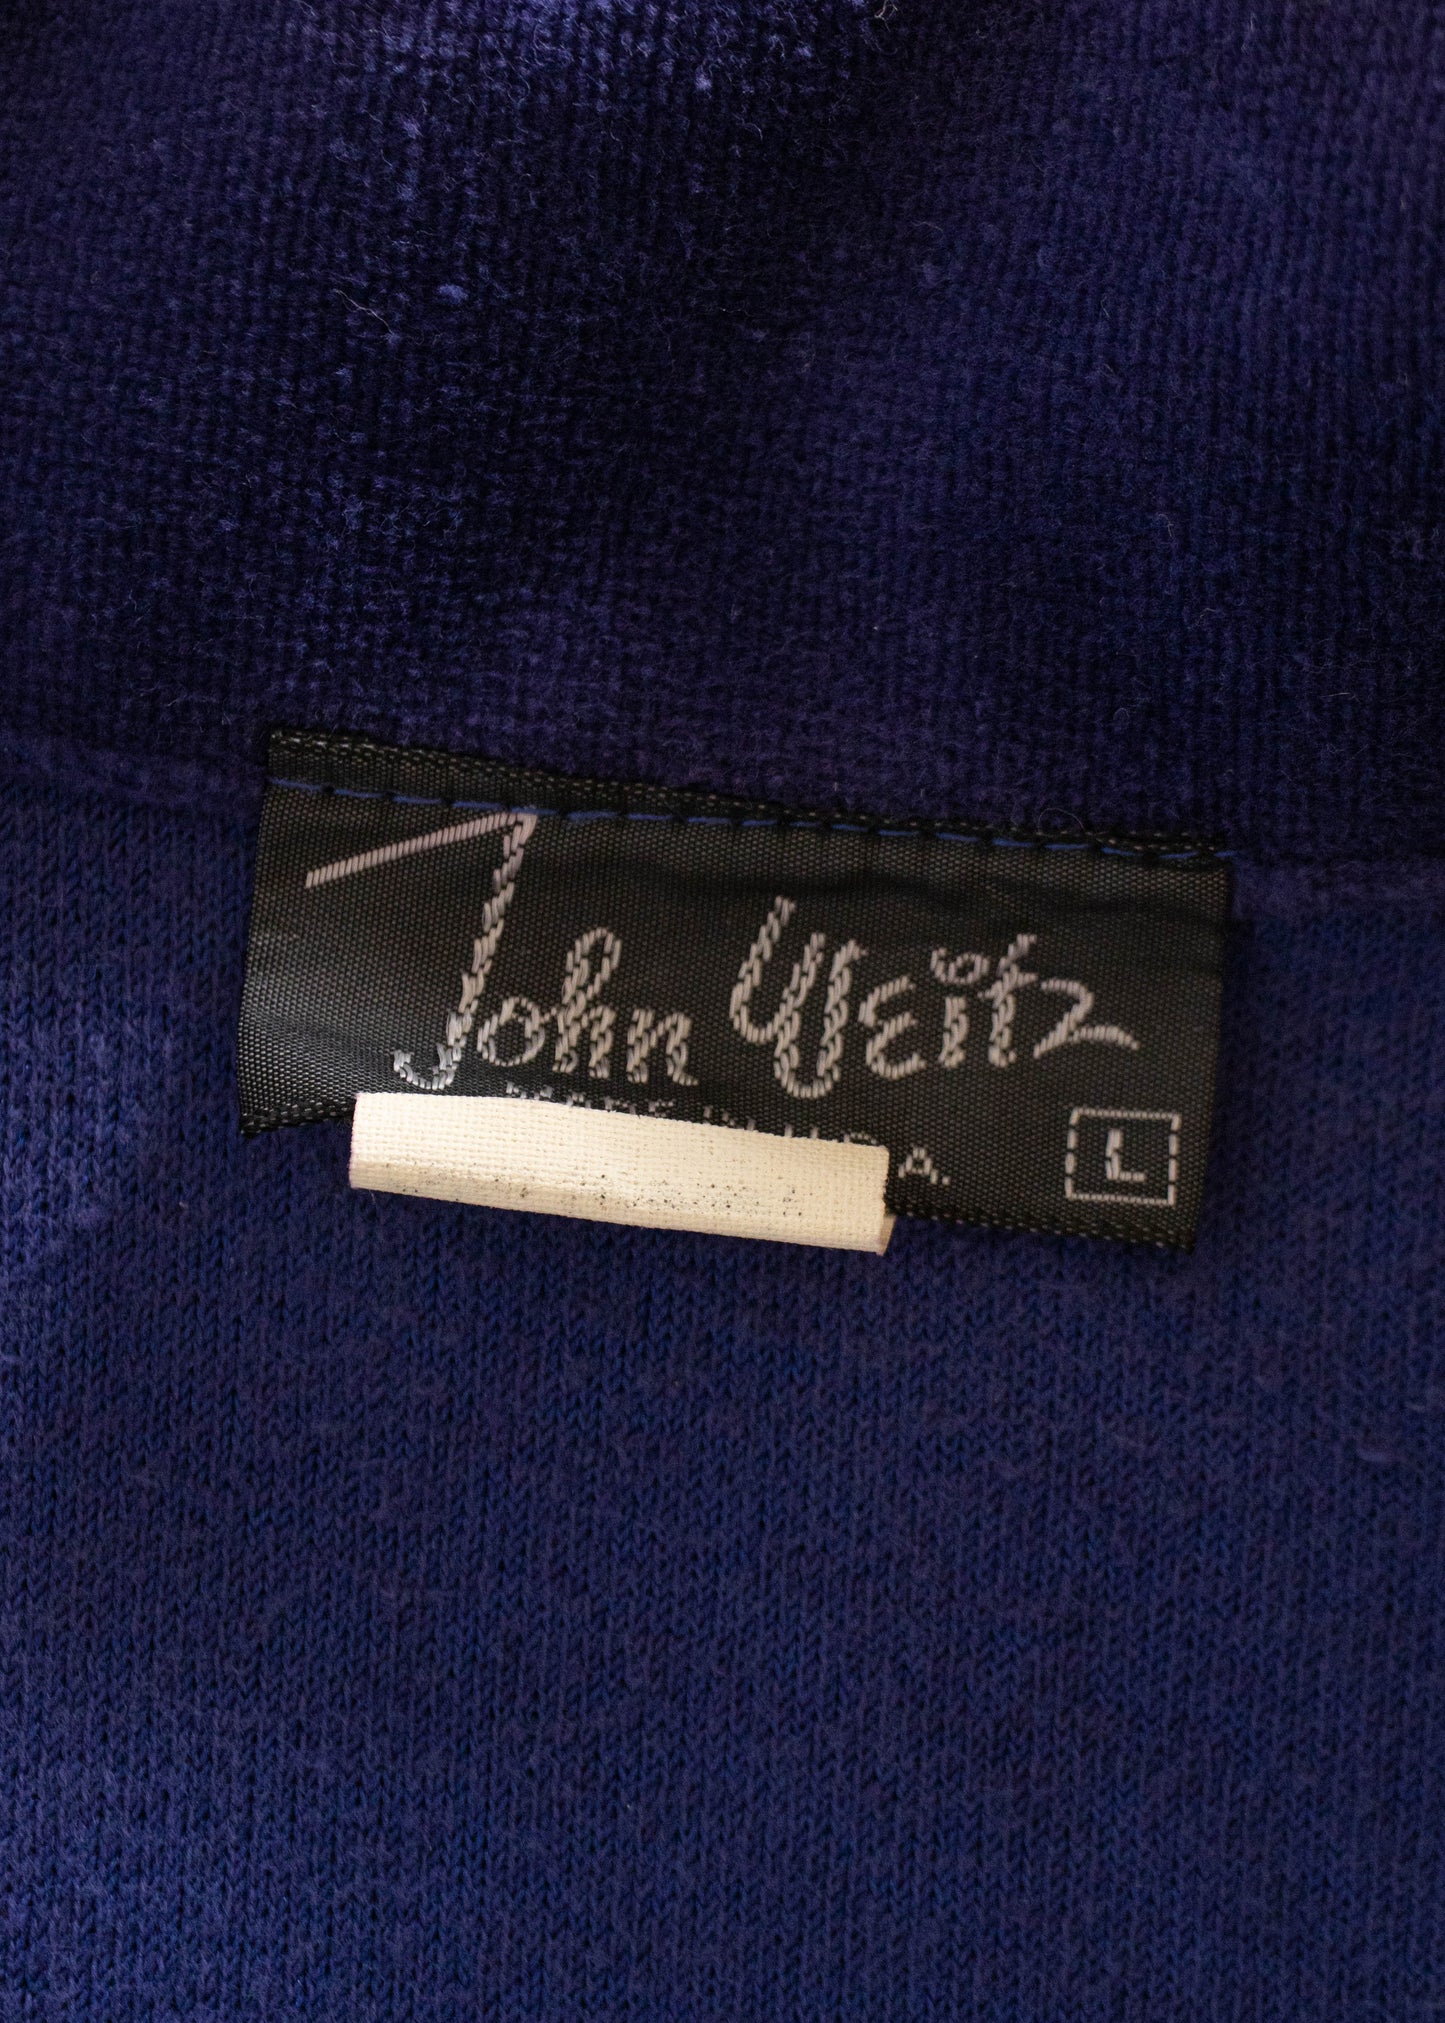 1970s John Weitz Velour Track Jacket Size M/L